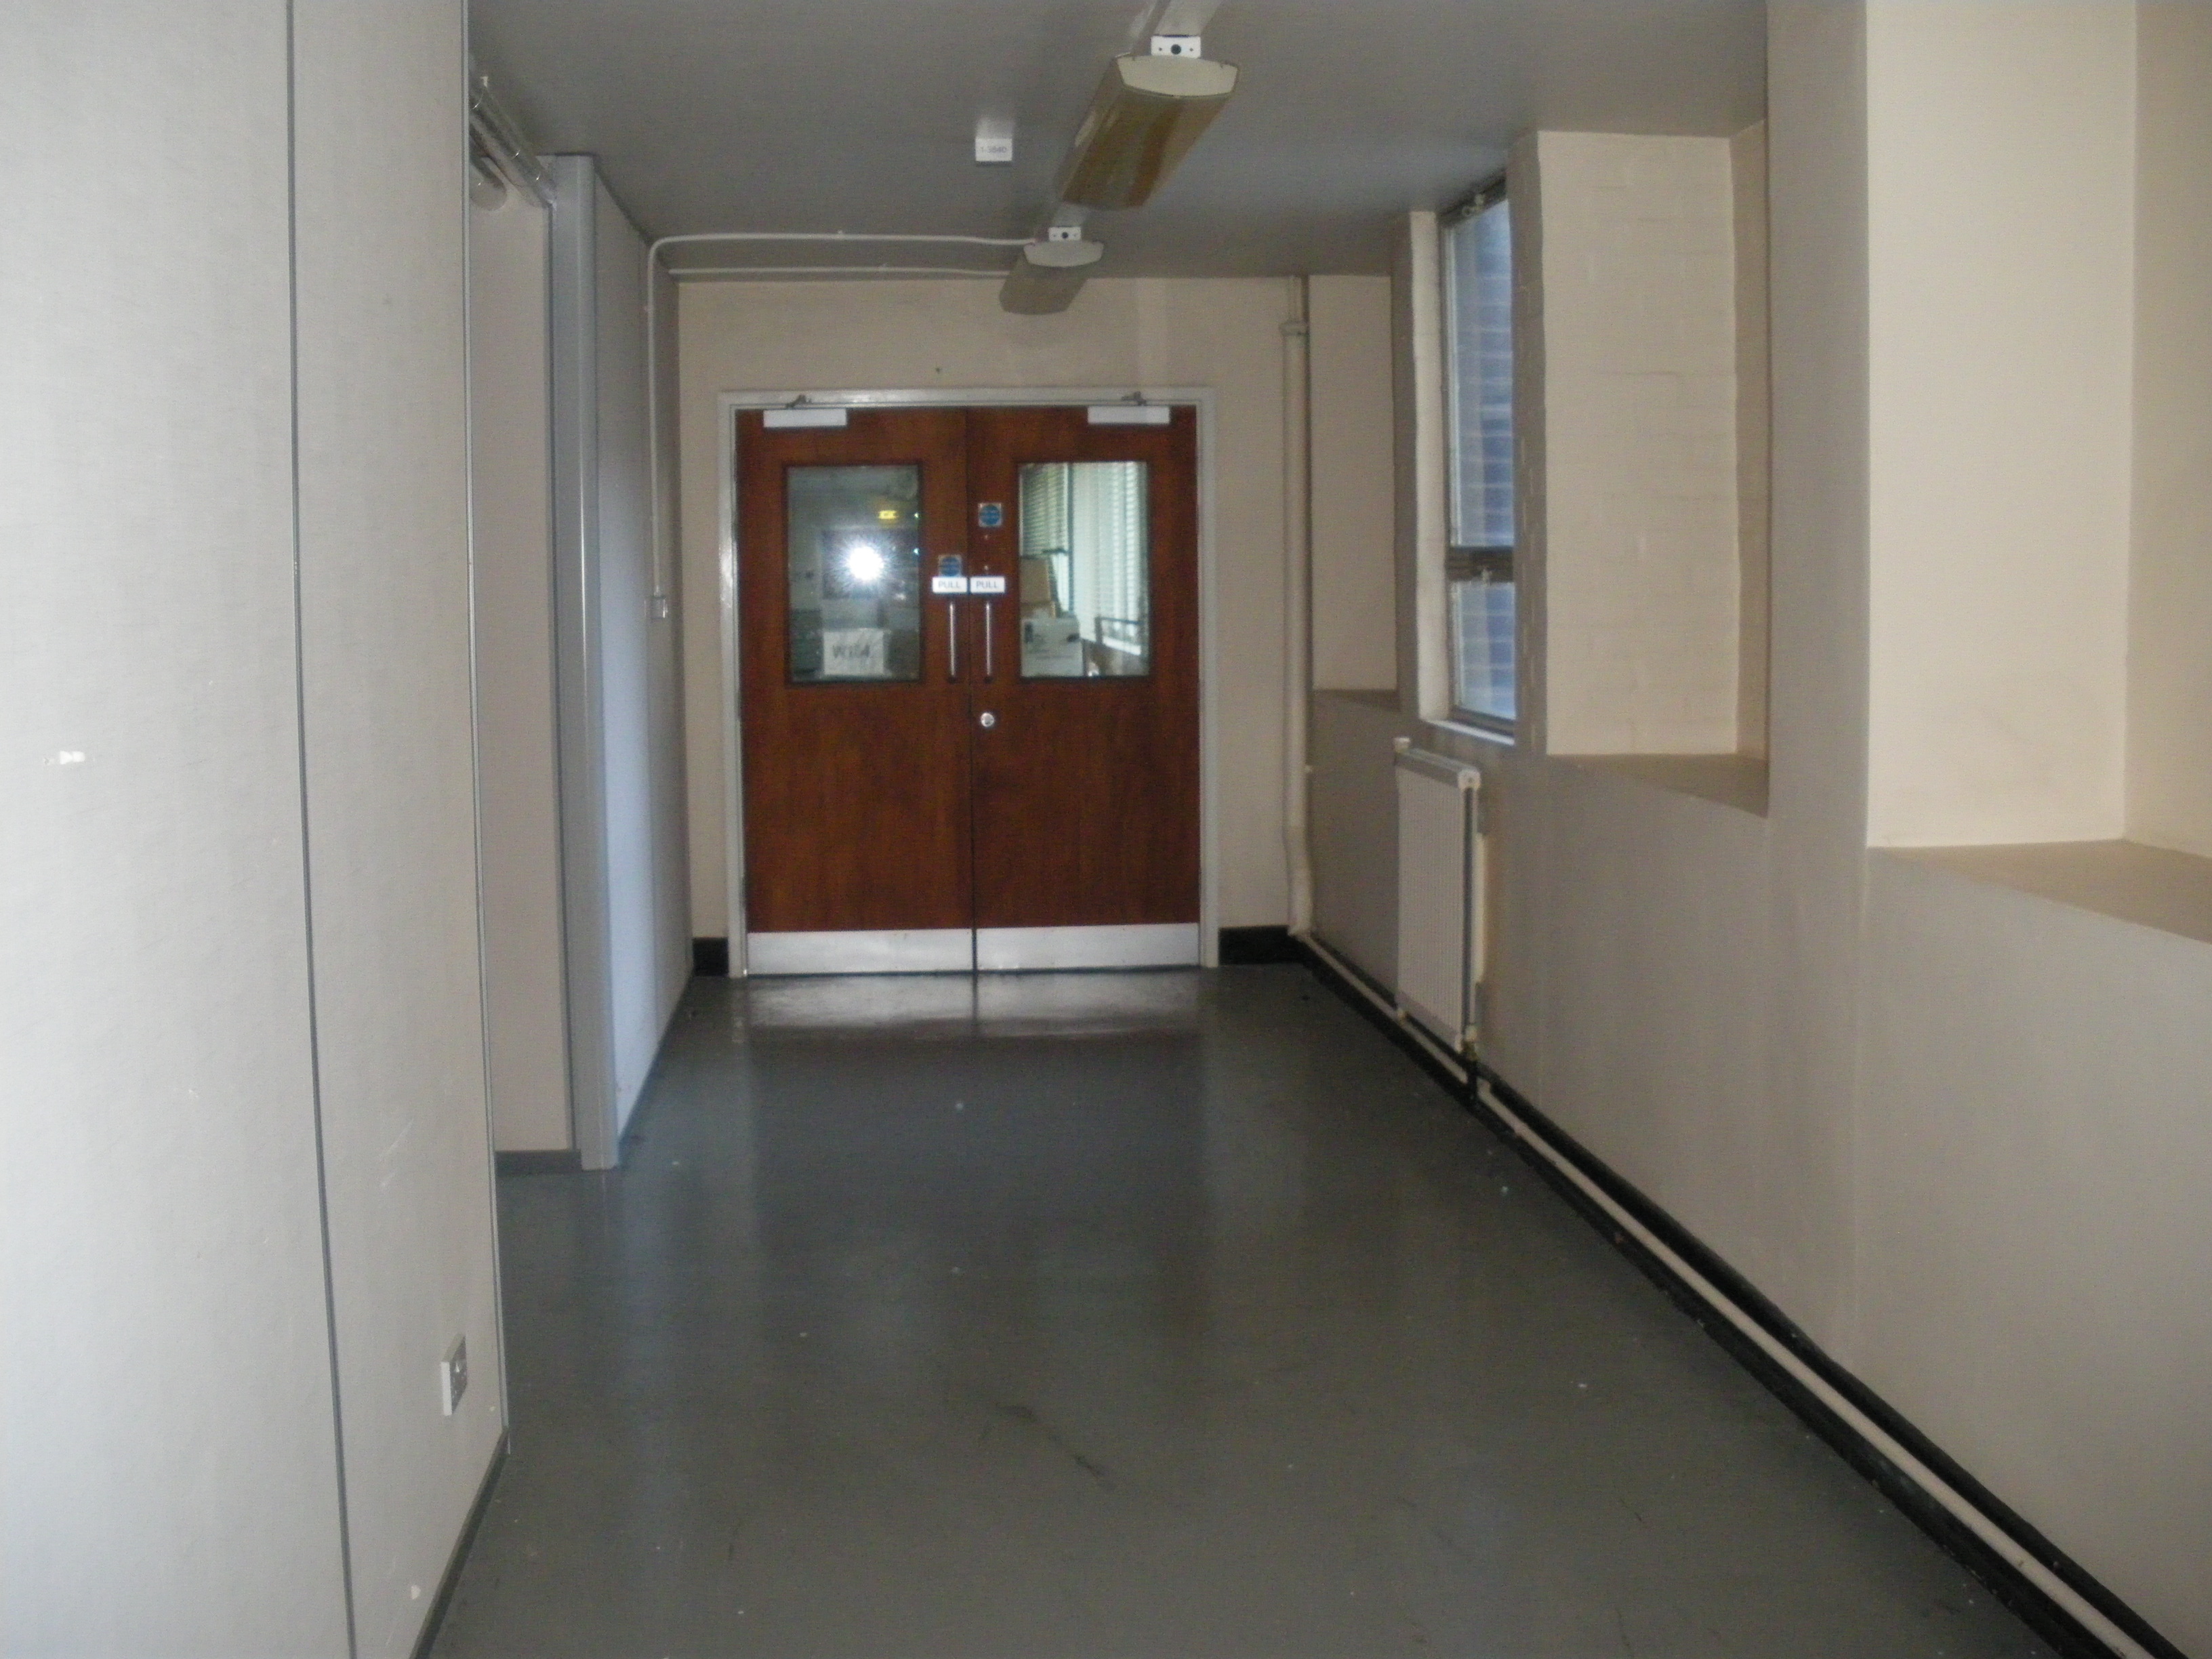 Corridor between F core lobby and W104